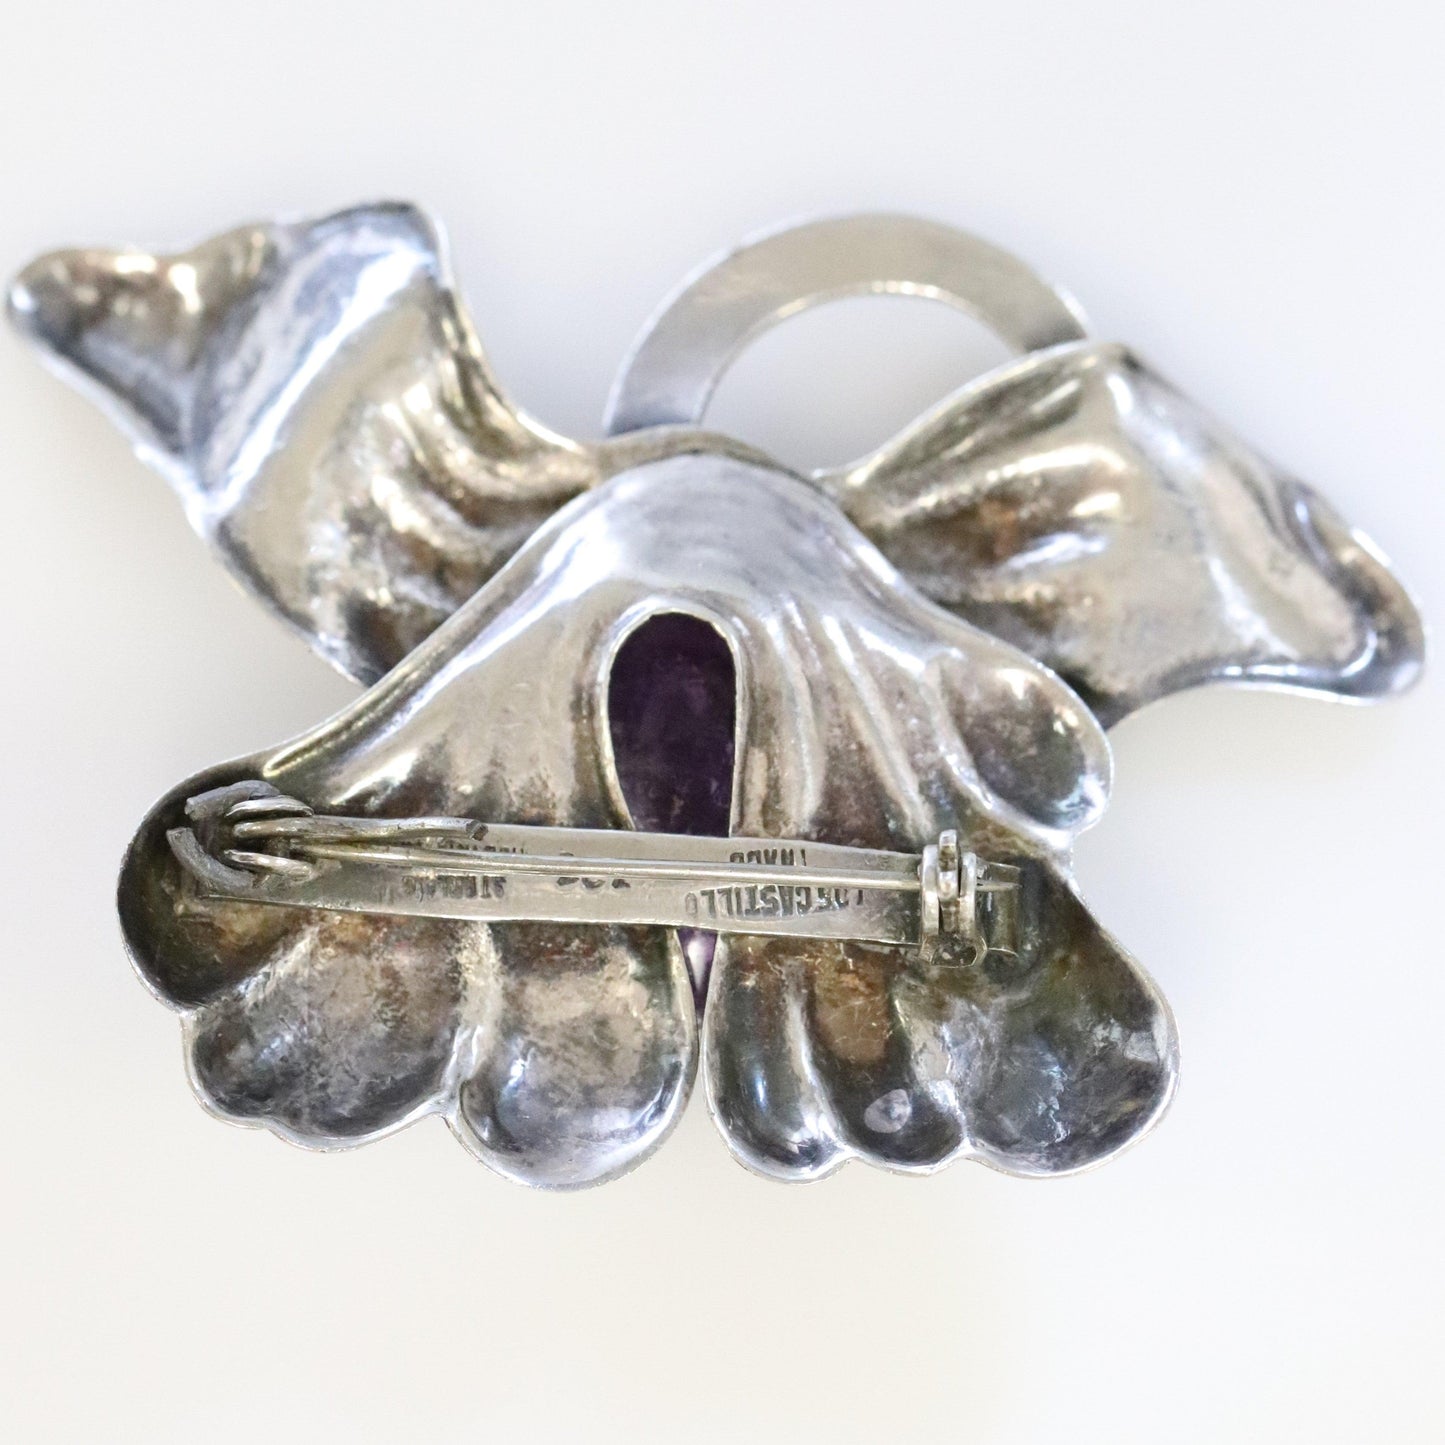 Vintage Los Castillo Taxco Silver Mexican Jewelry | Mid Century Orchid Amethyst Brooch - Carmel Fine Silver Jewelry